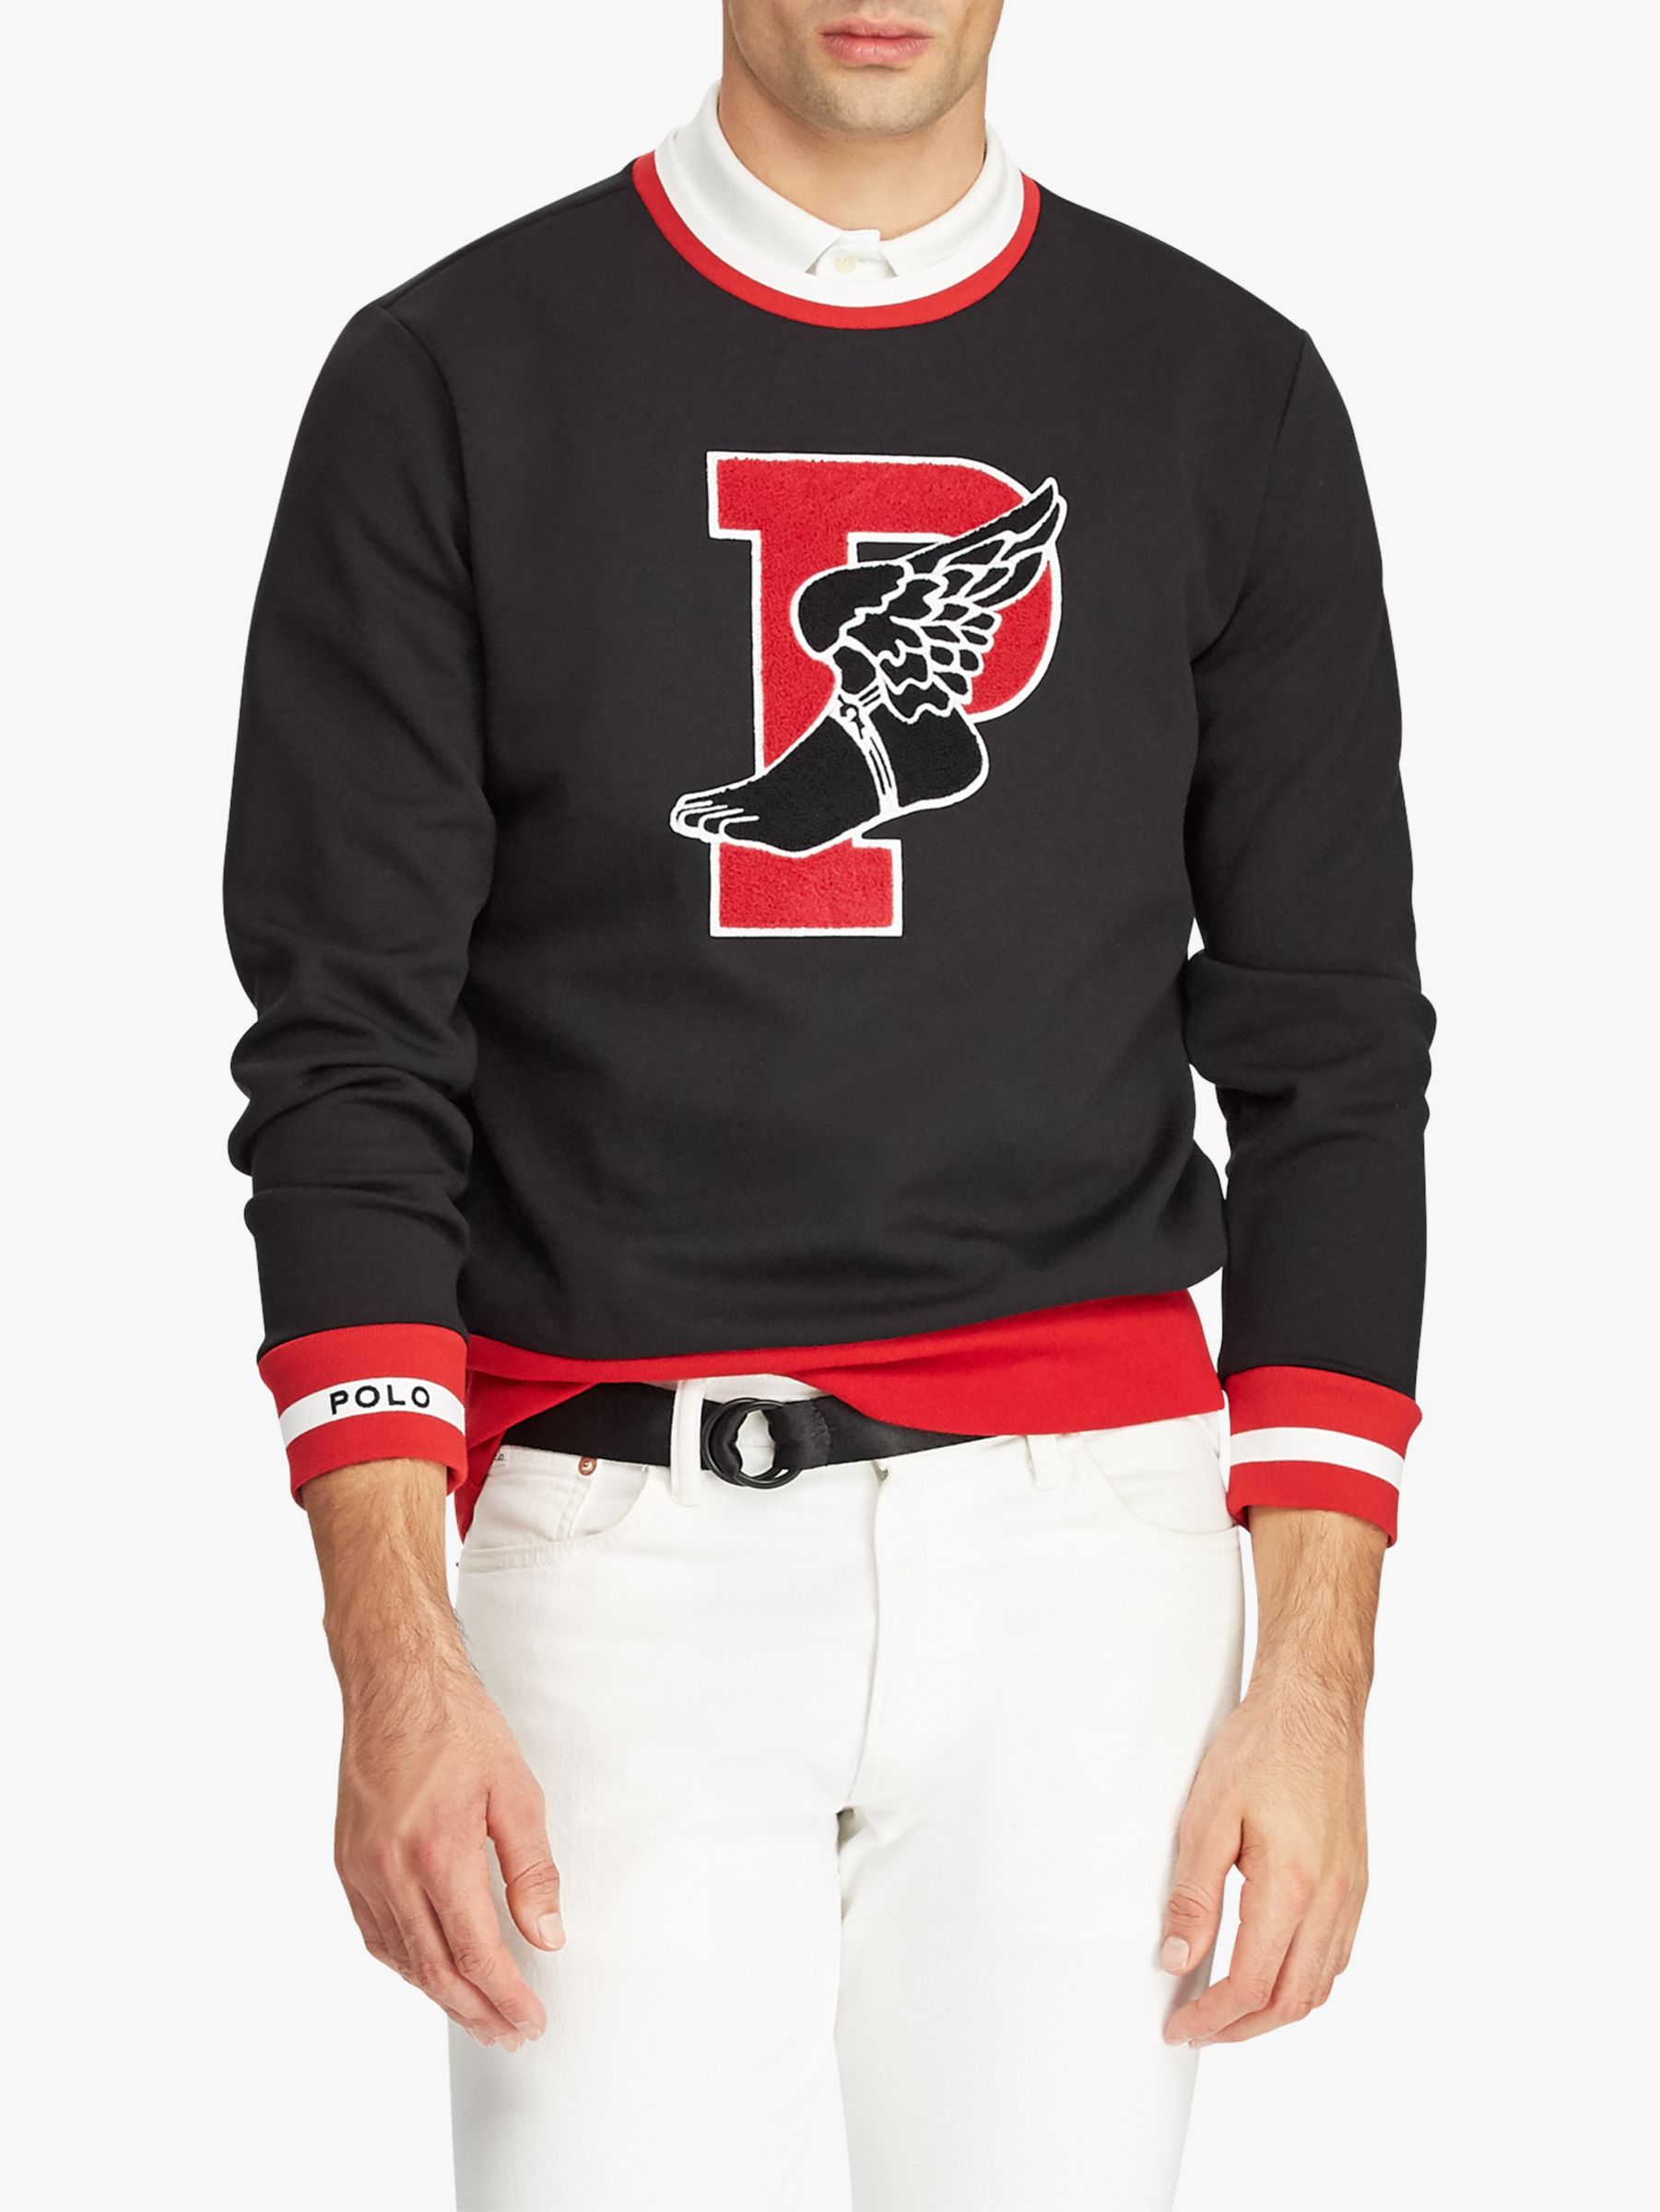 Polo Ralph Lauren P-Wing Graphic Sweatshirt, Black/Multi